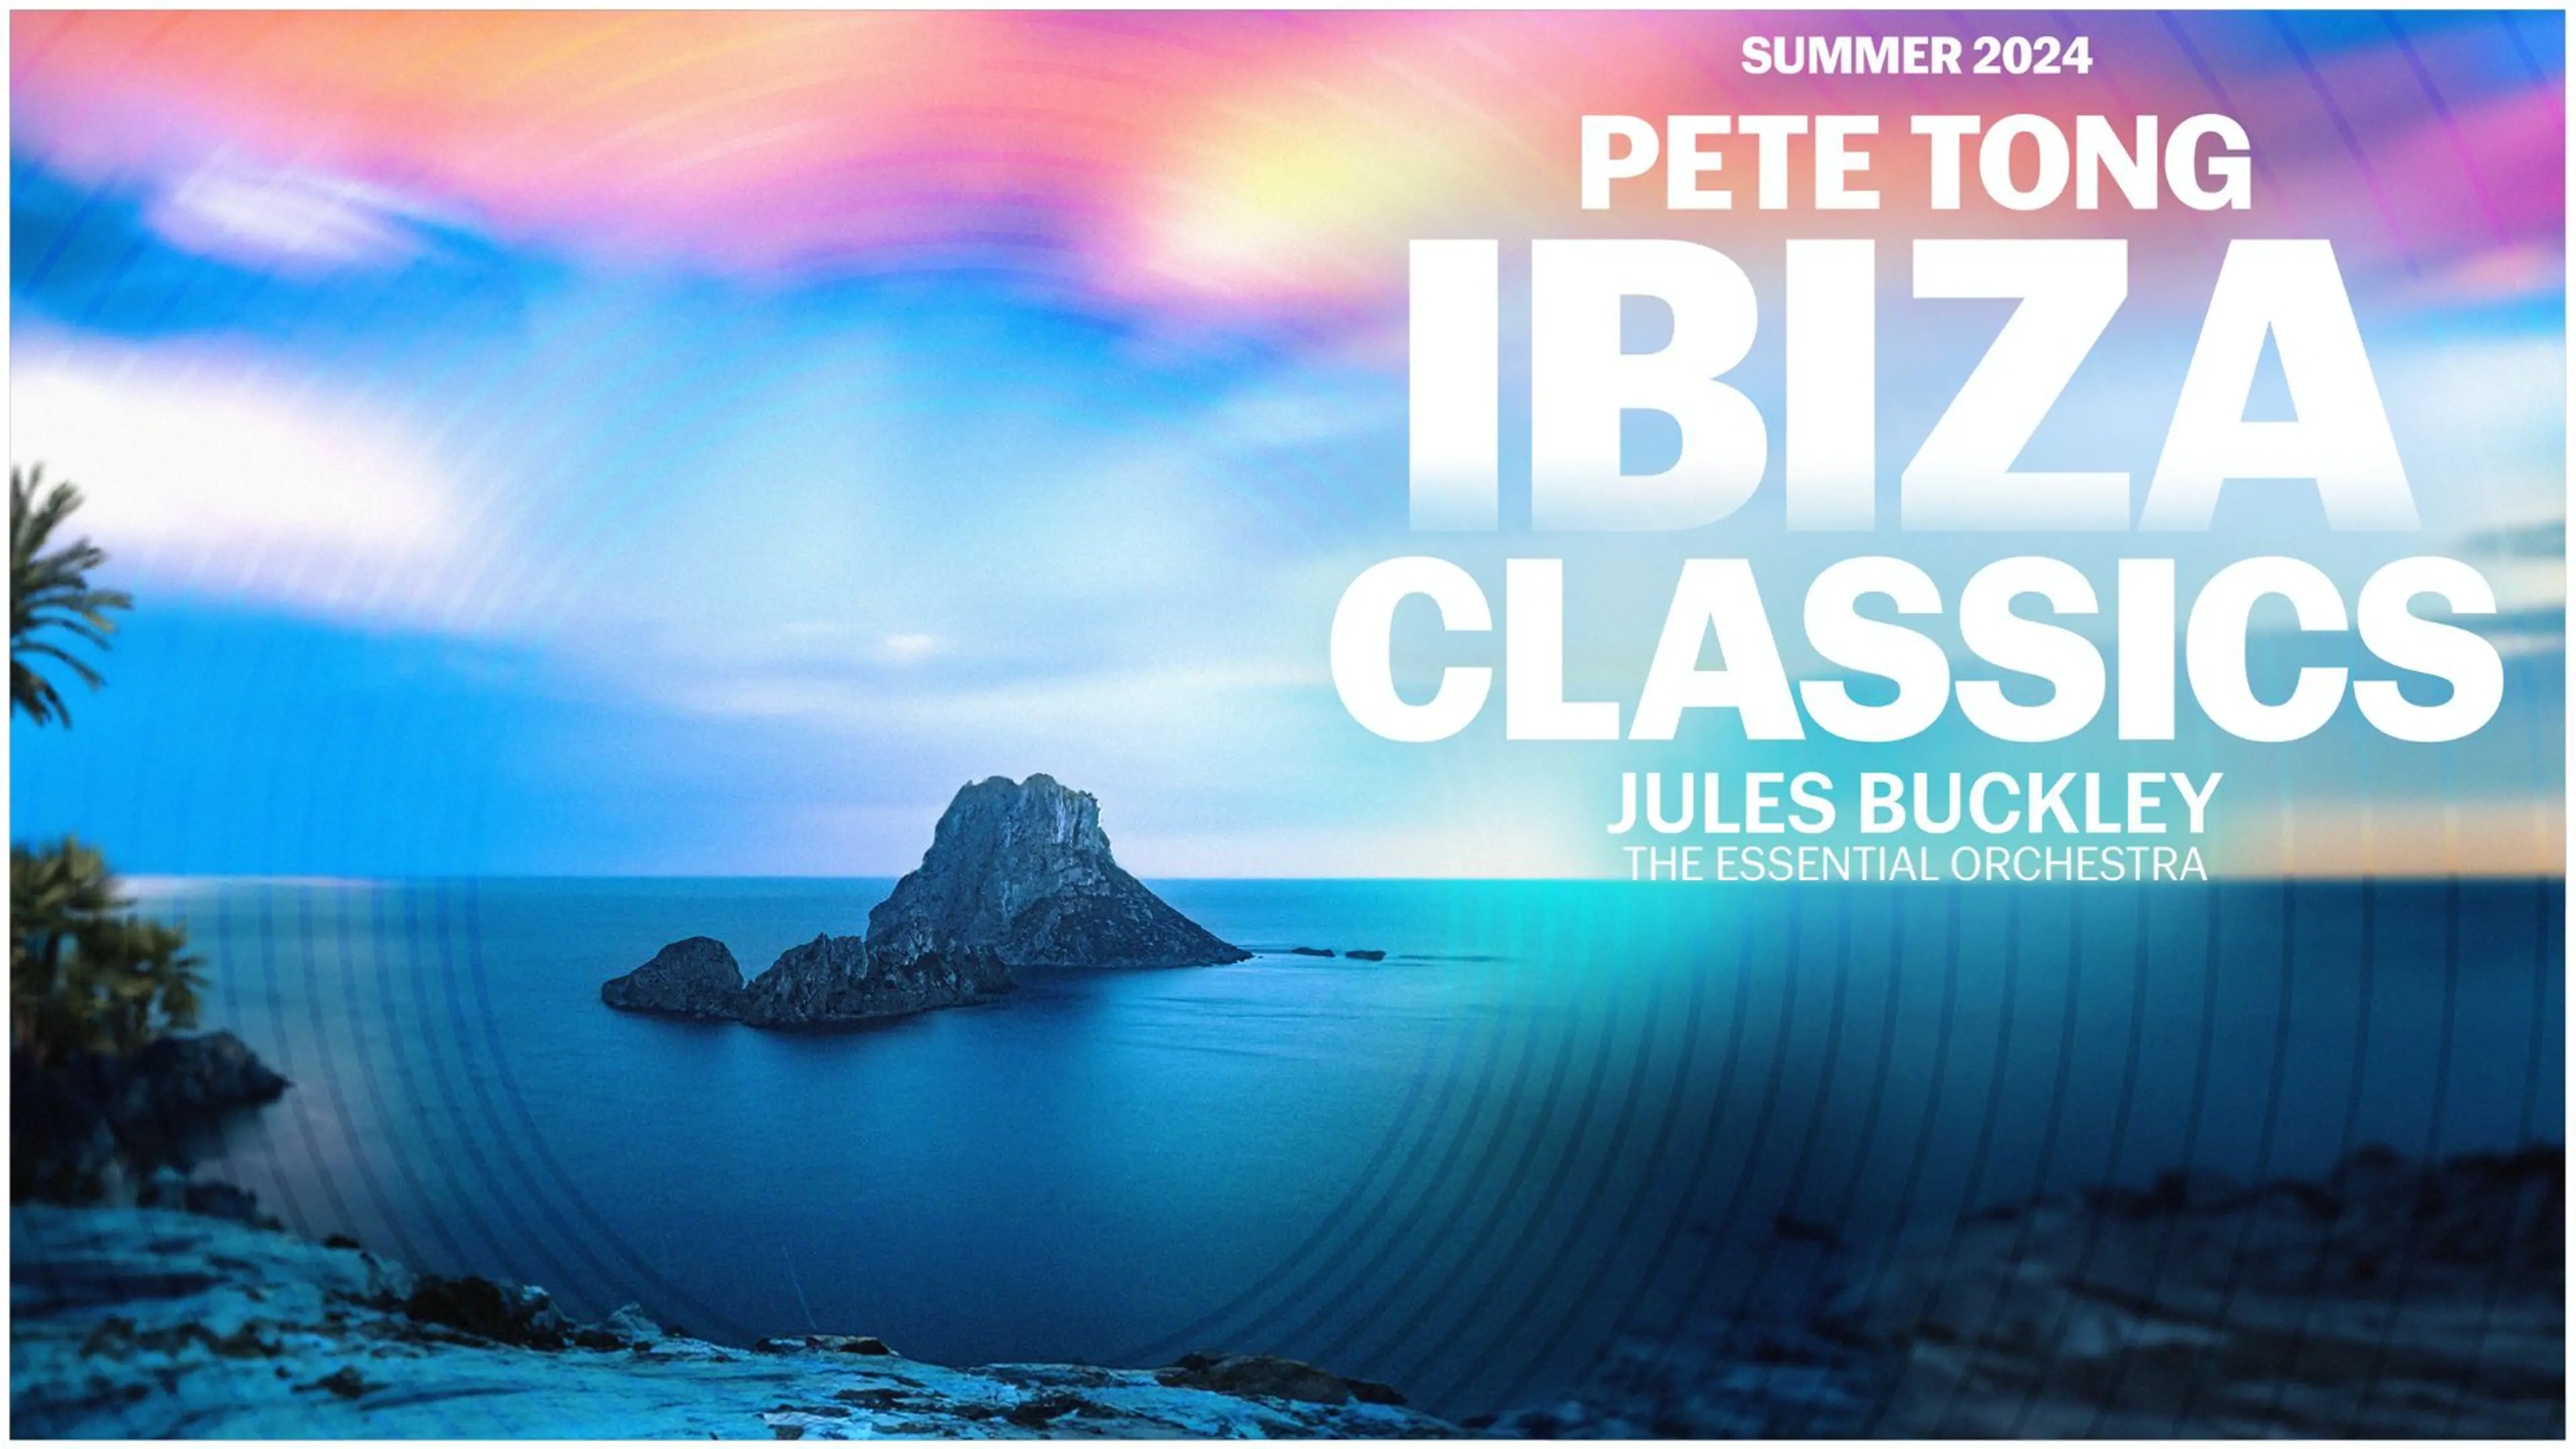 Pete Tong Ibiza Classics